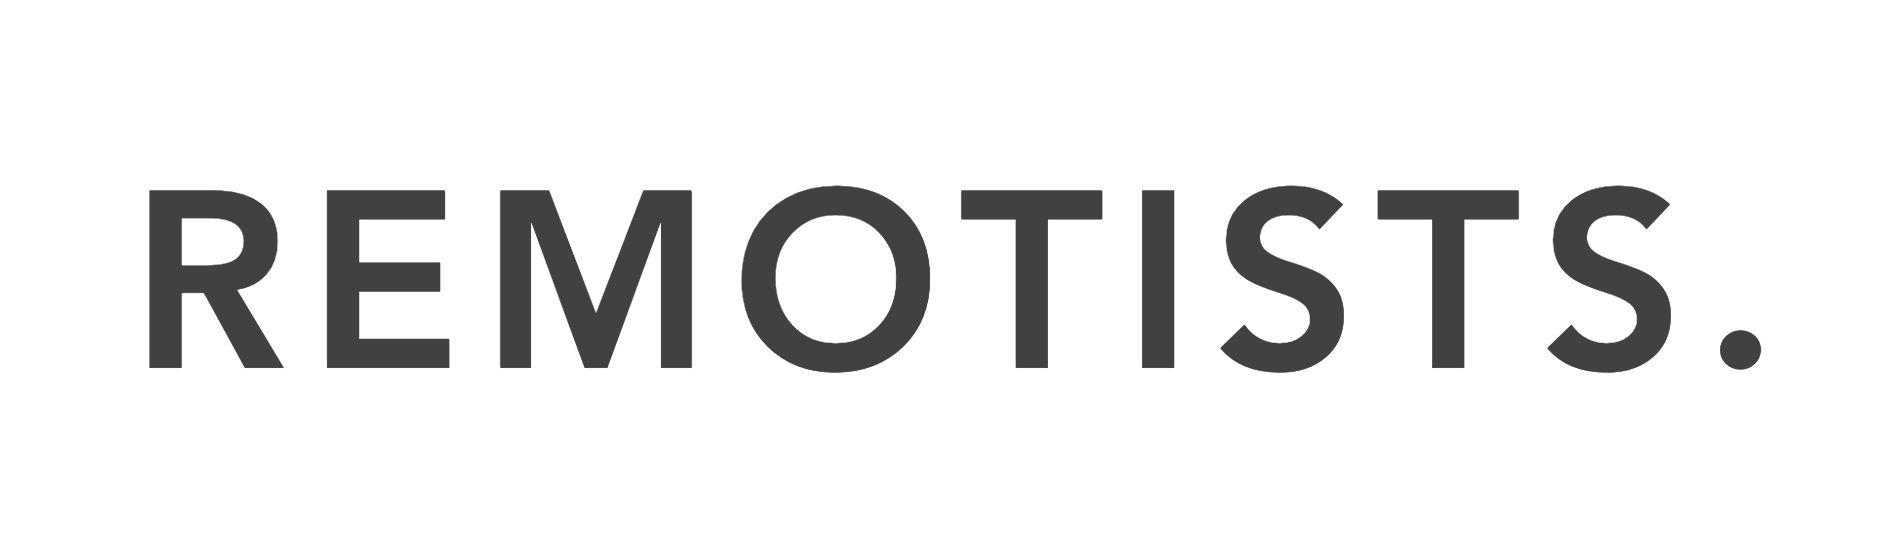 Remotists - Logo